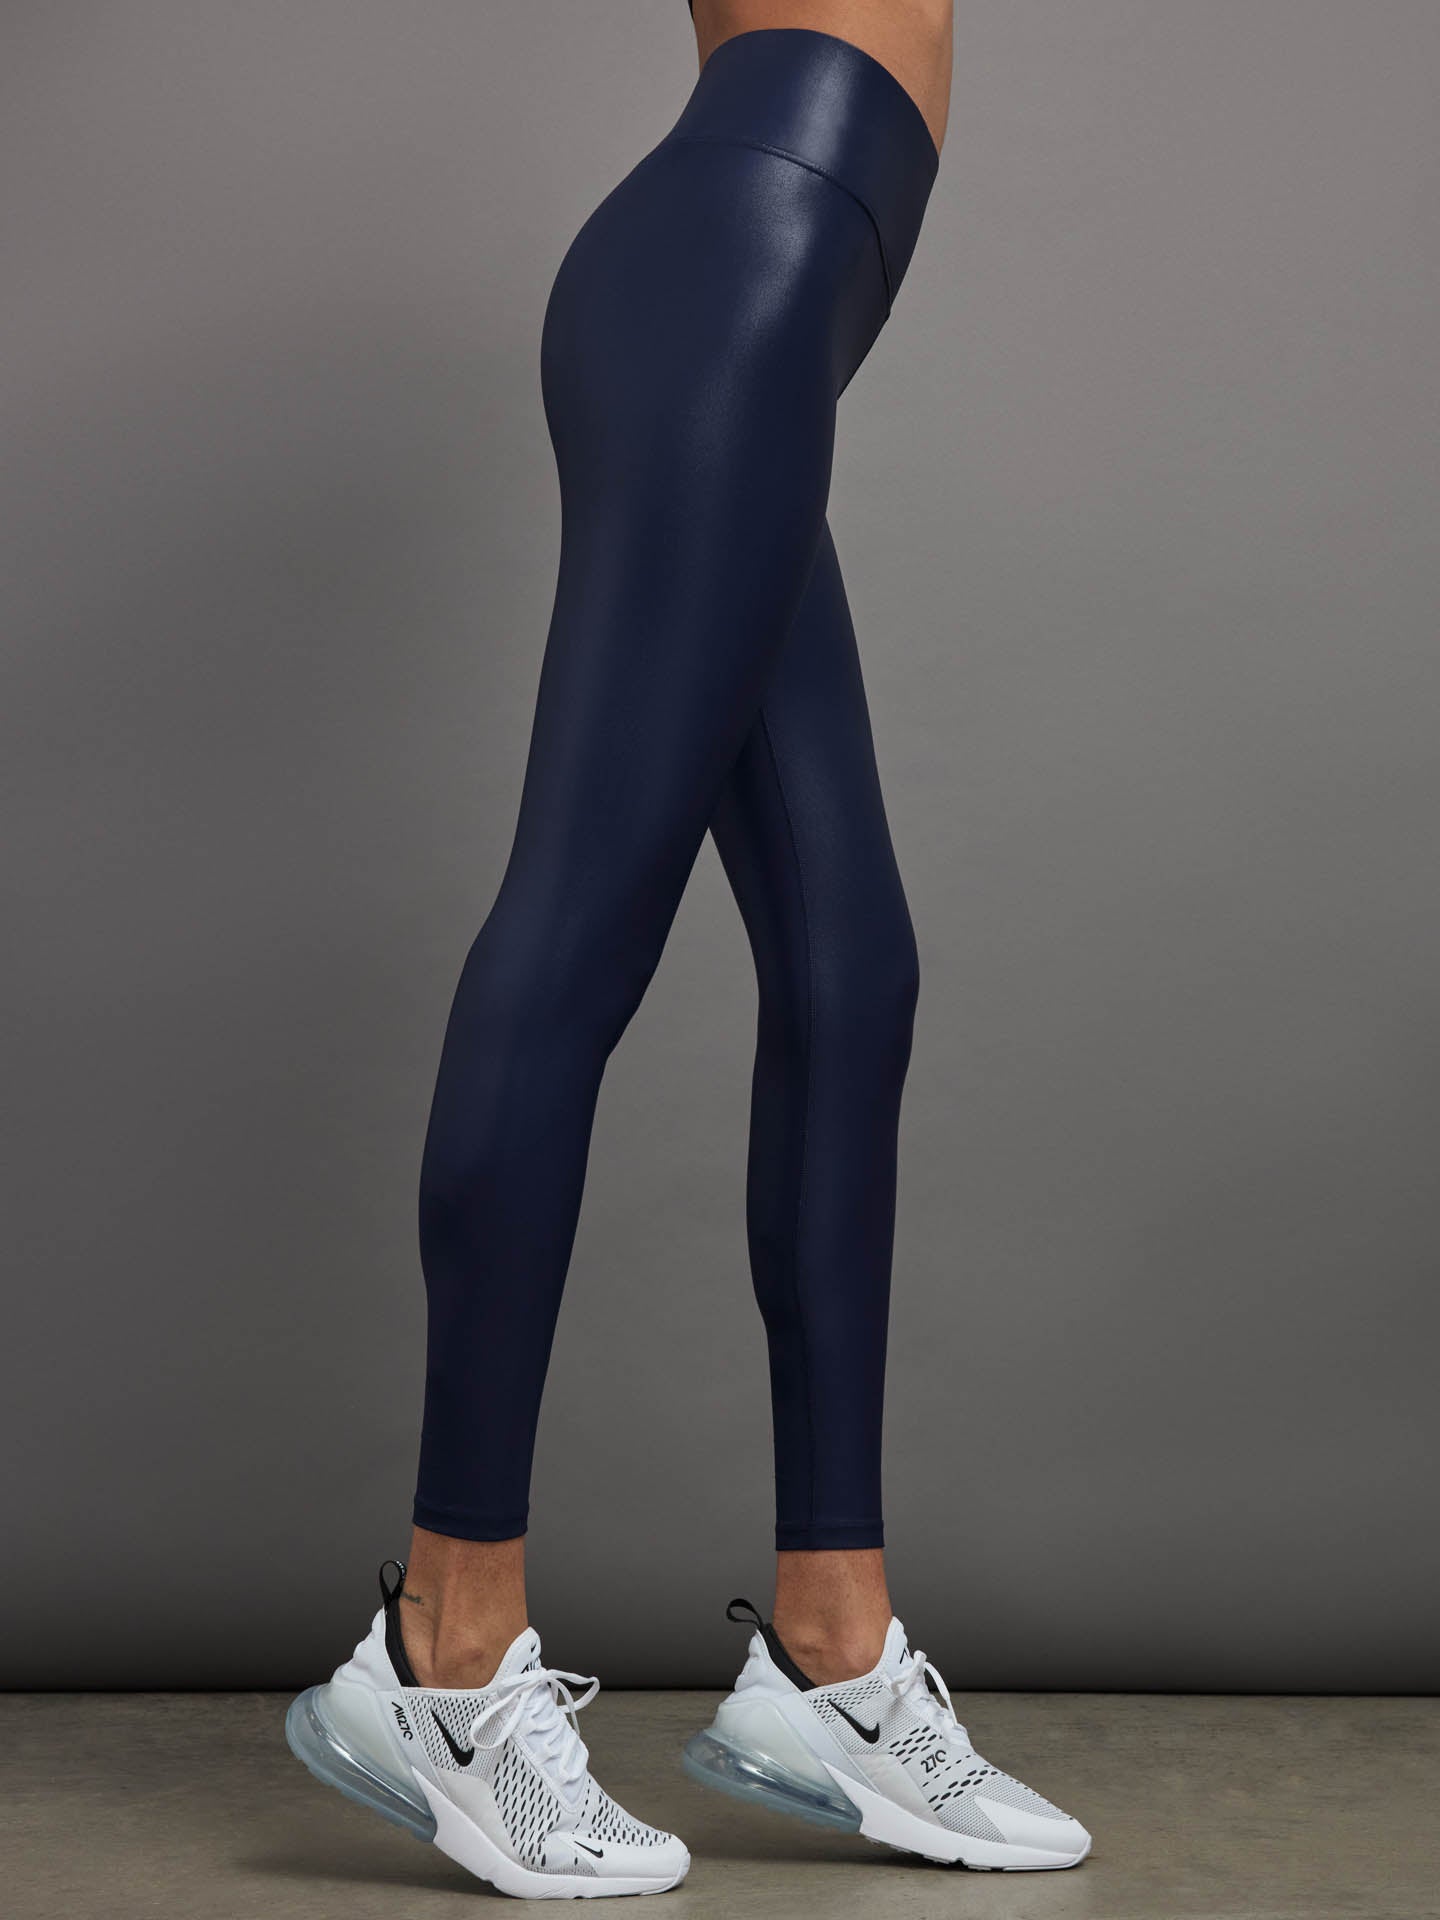 Carbon38 Takara Shine Blue High Rise Athletic Compression Leggings Women's  XL